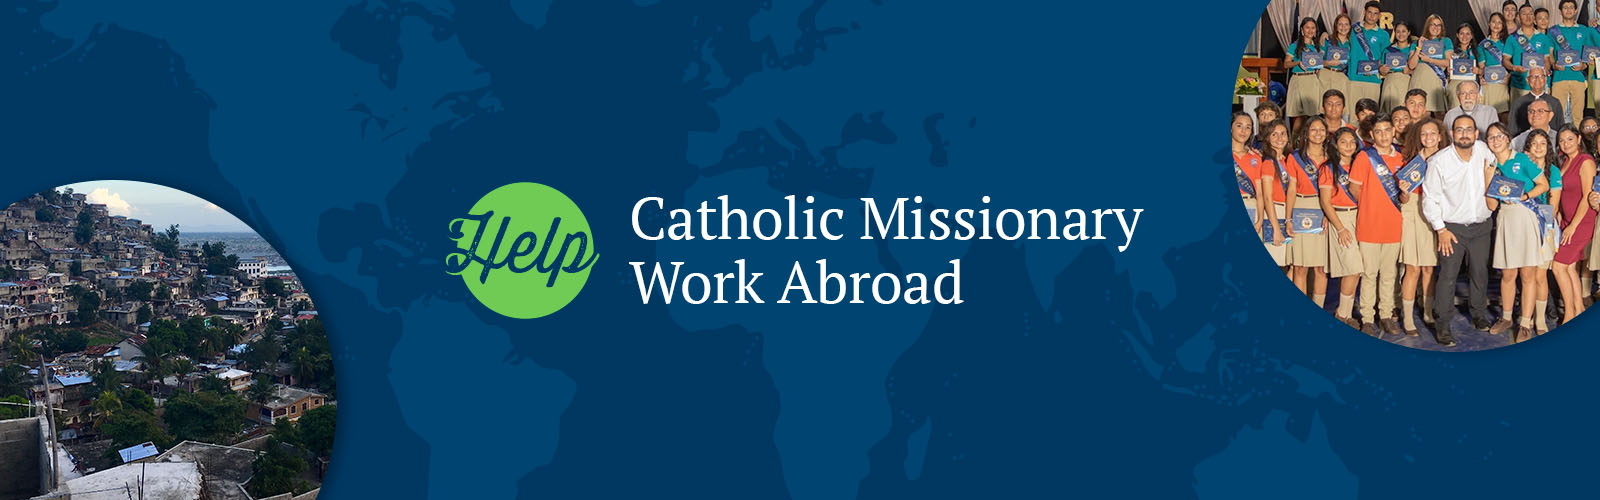 Help Catholic Missionary Work Abroad